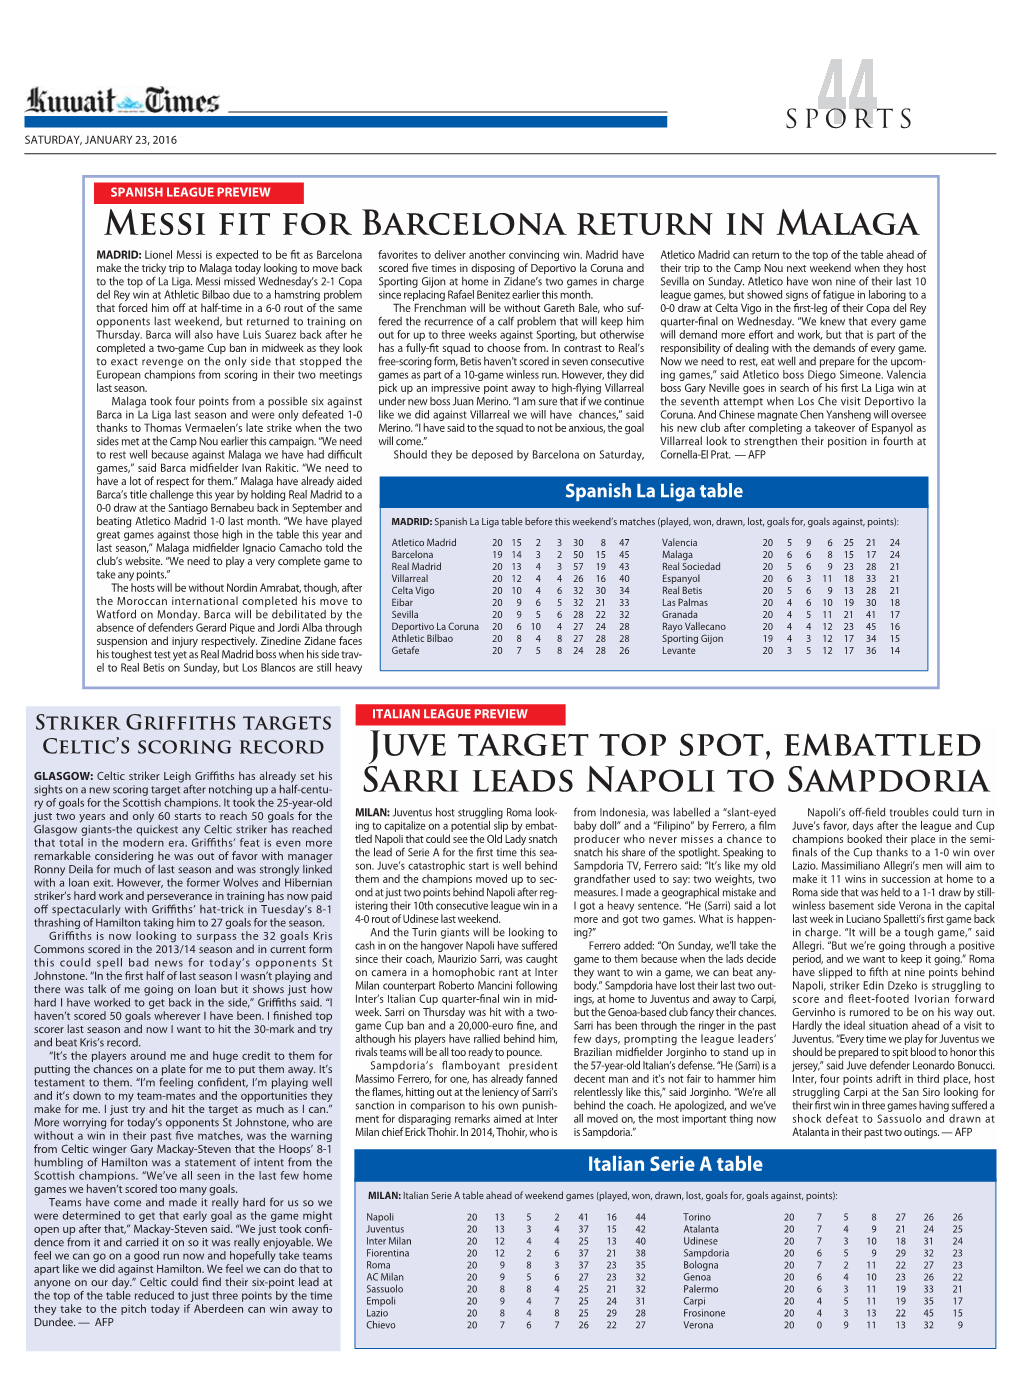 Messi Fit for Barcelona Return in Malaga Juve Target Top Spot